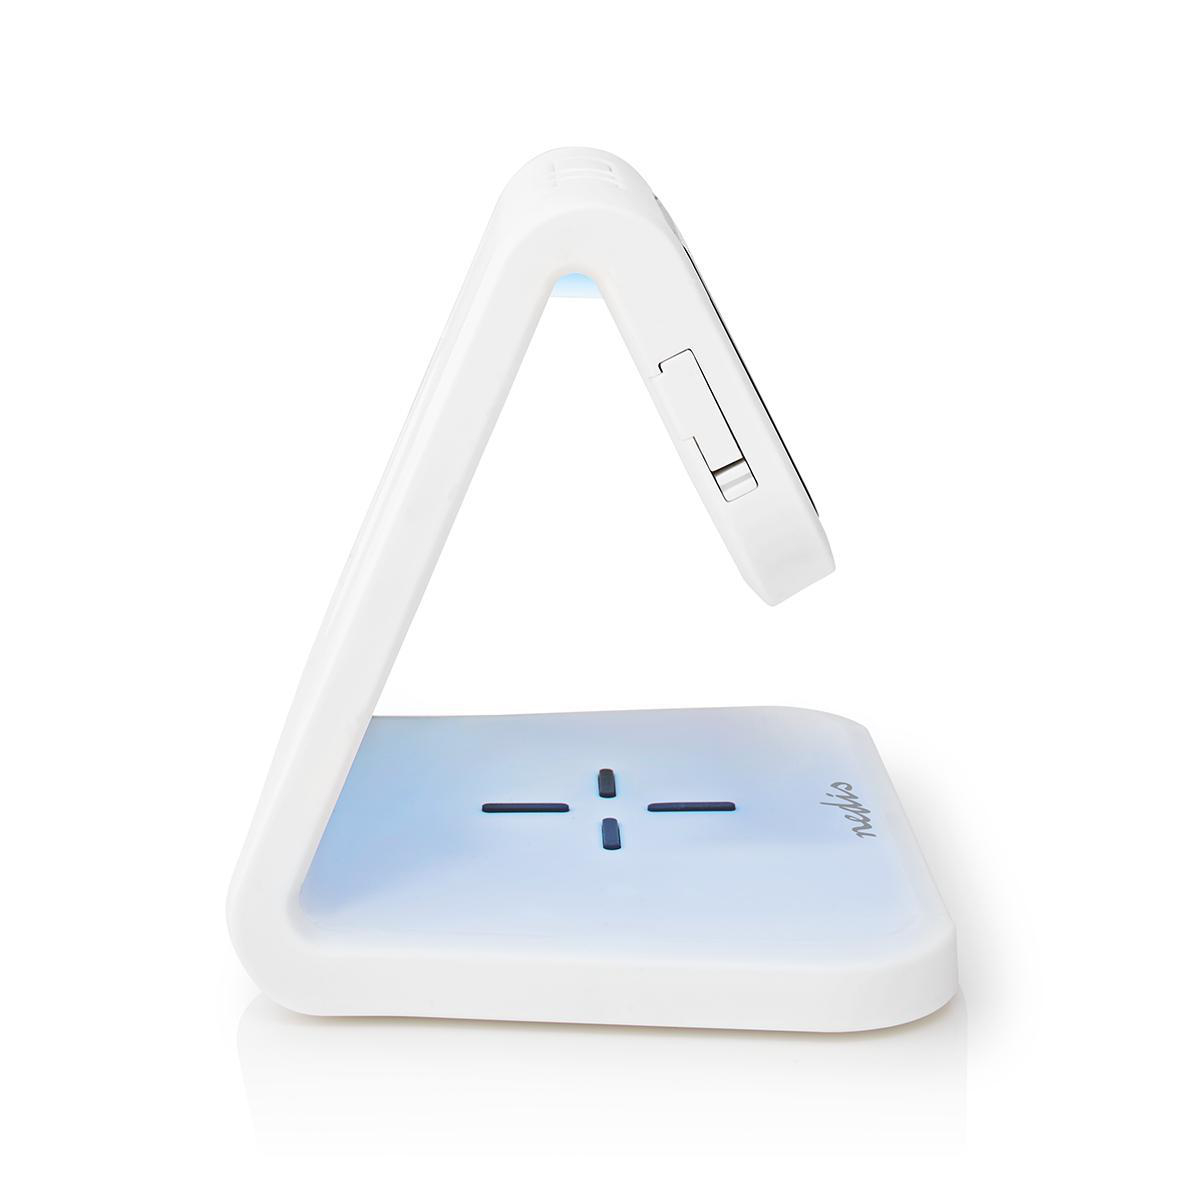 Nedis Alarm Clock with QI Wireless Charging